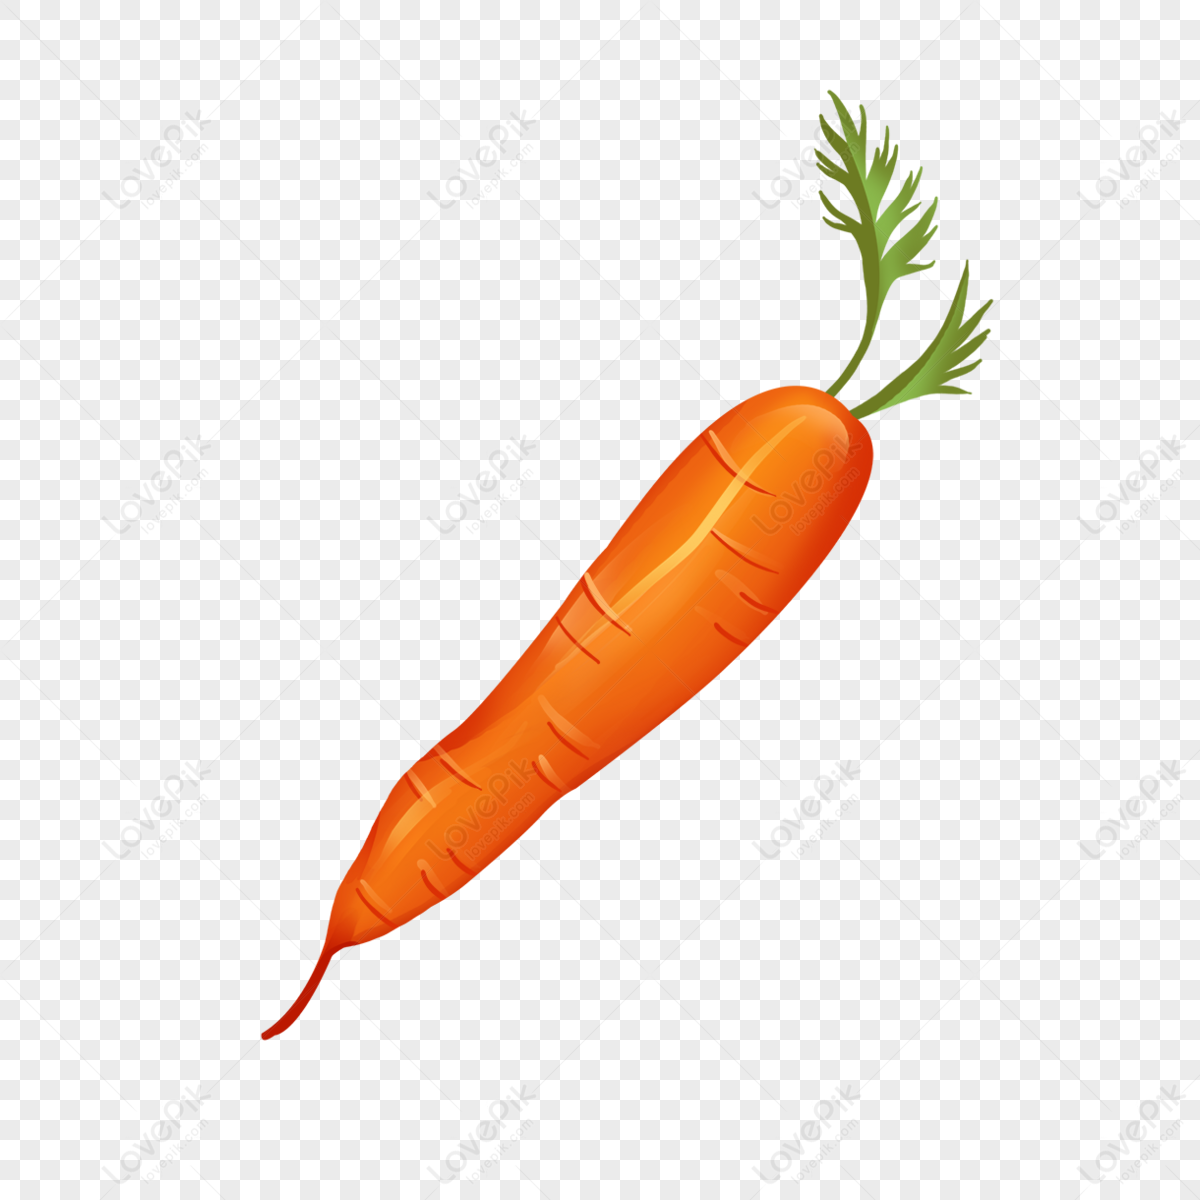 Orange Carrot Clip Art,hand Drawn Carrot,carrots,vegetables PNG Image ...